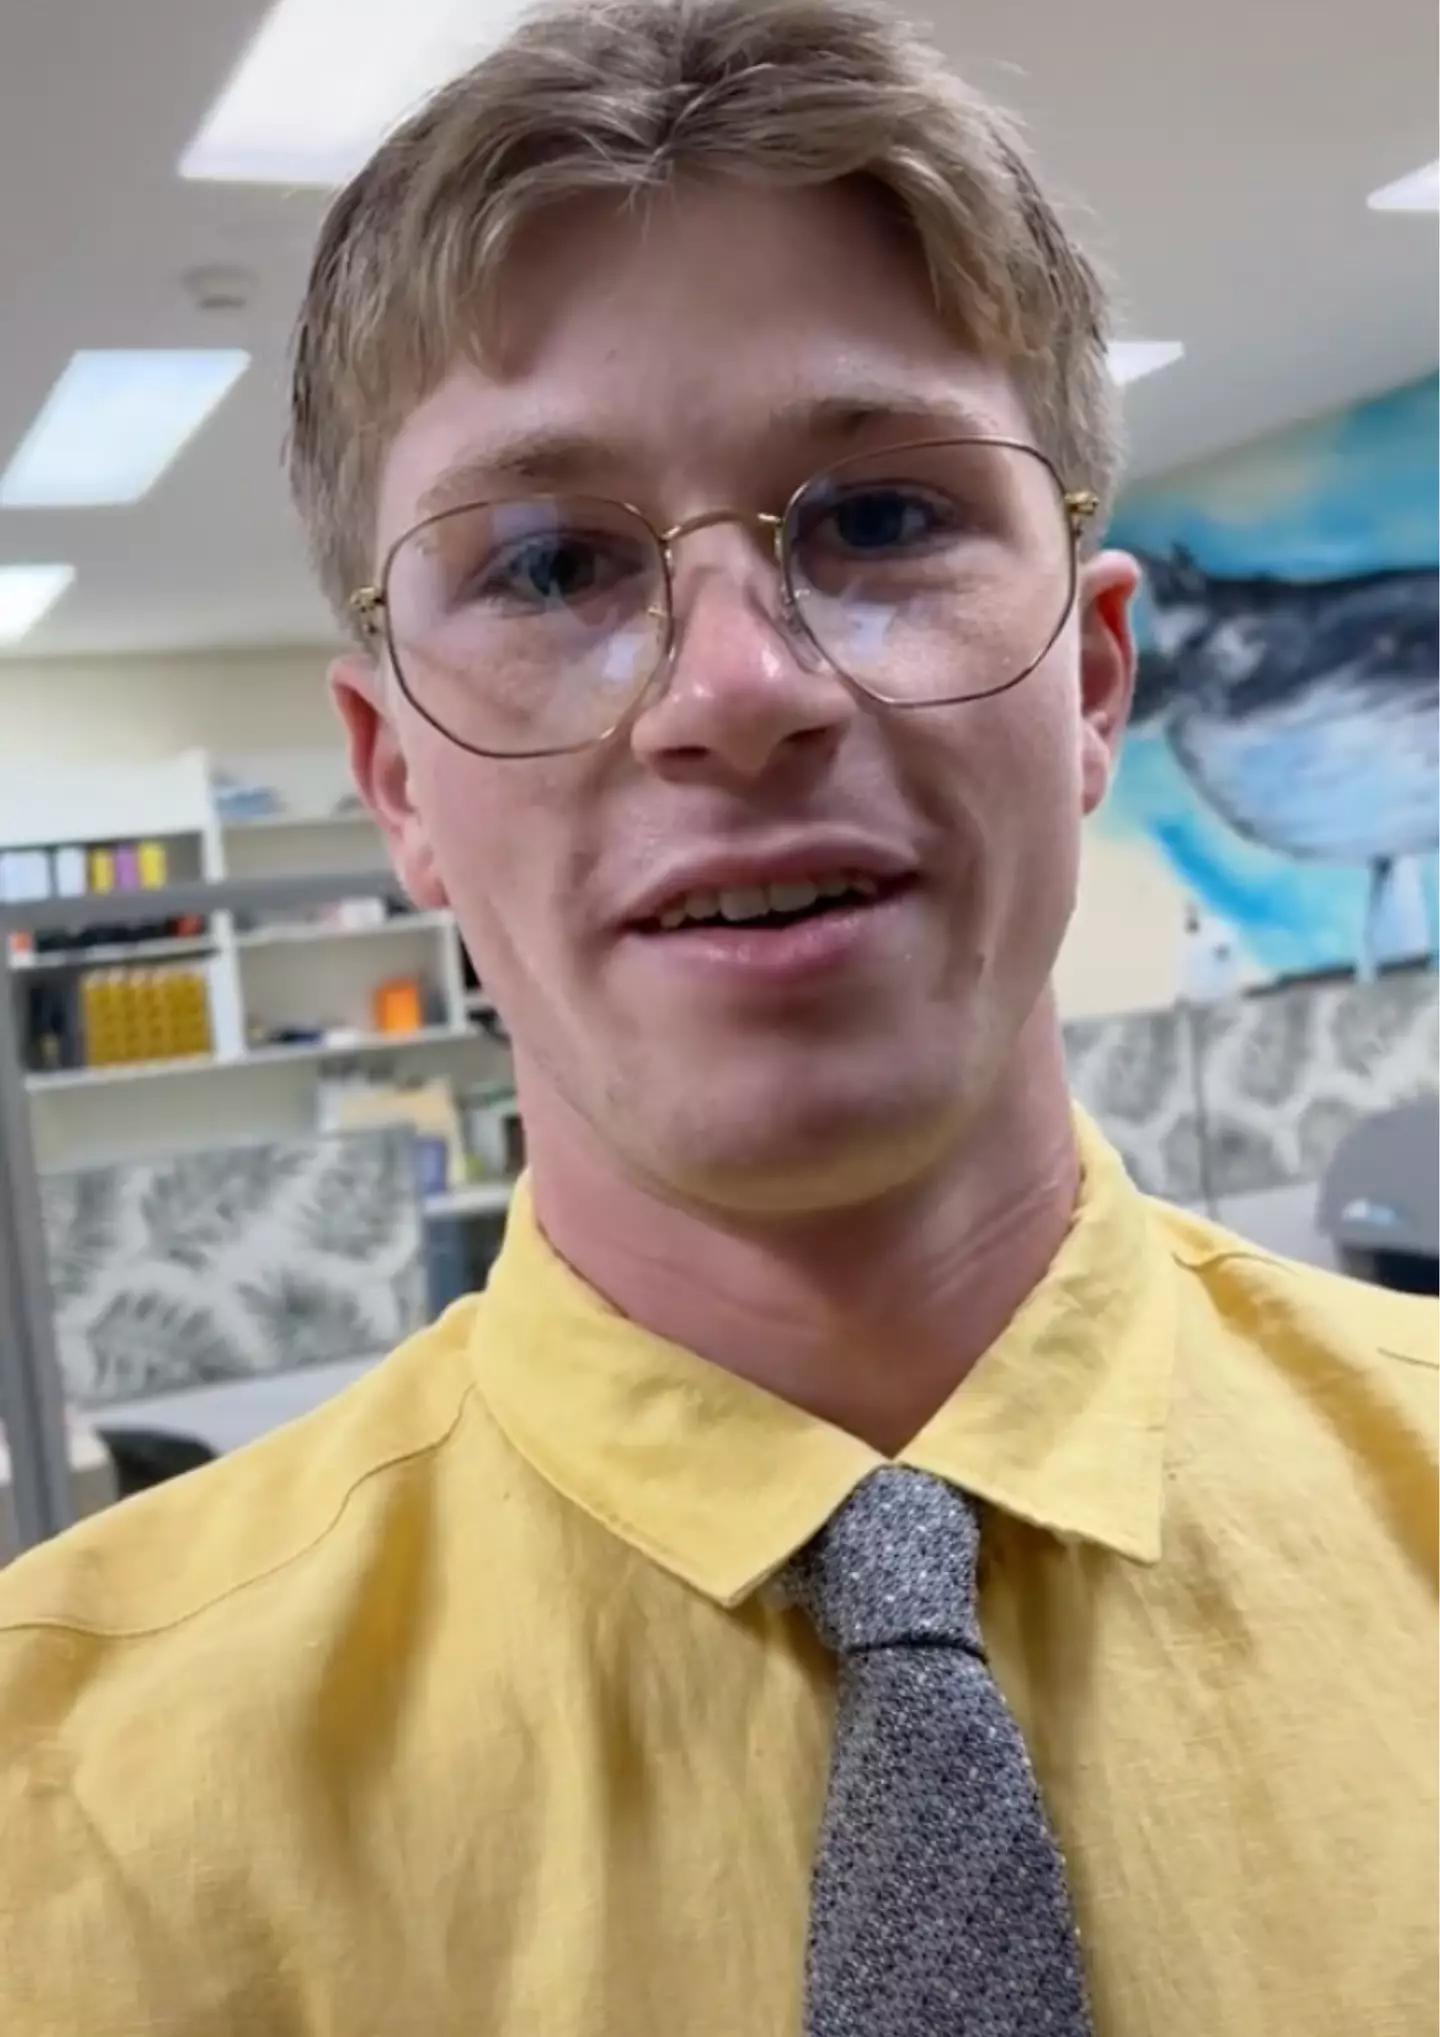 Robert's Dwight Schrute costume unfortunately made him look like Jeffrey Dahmer.